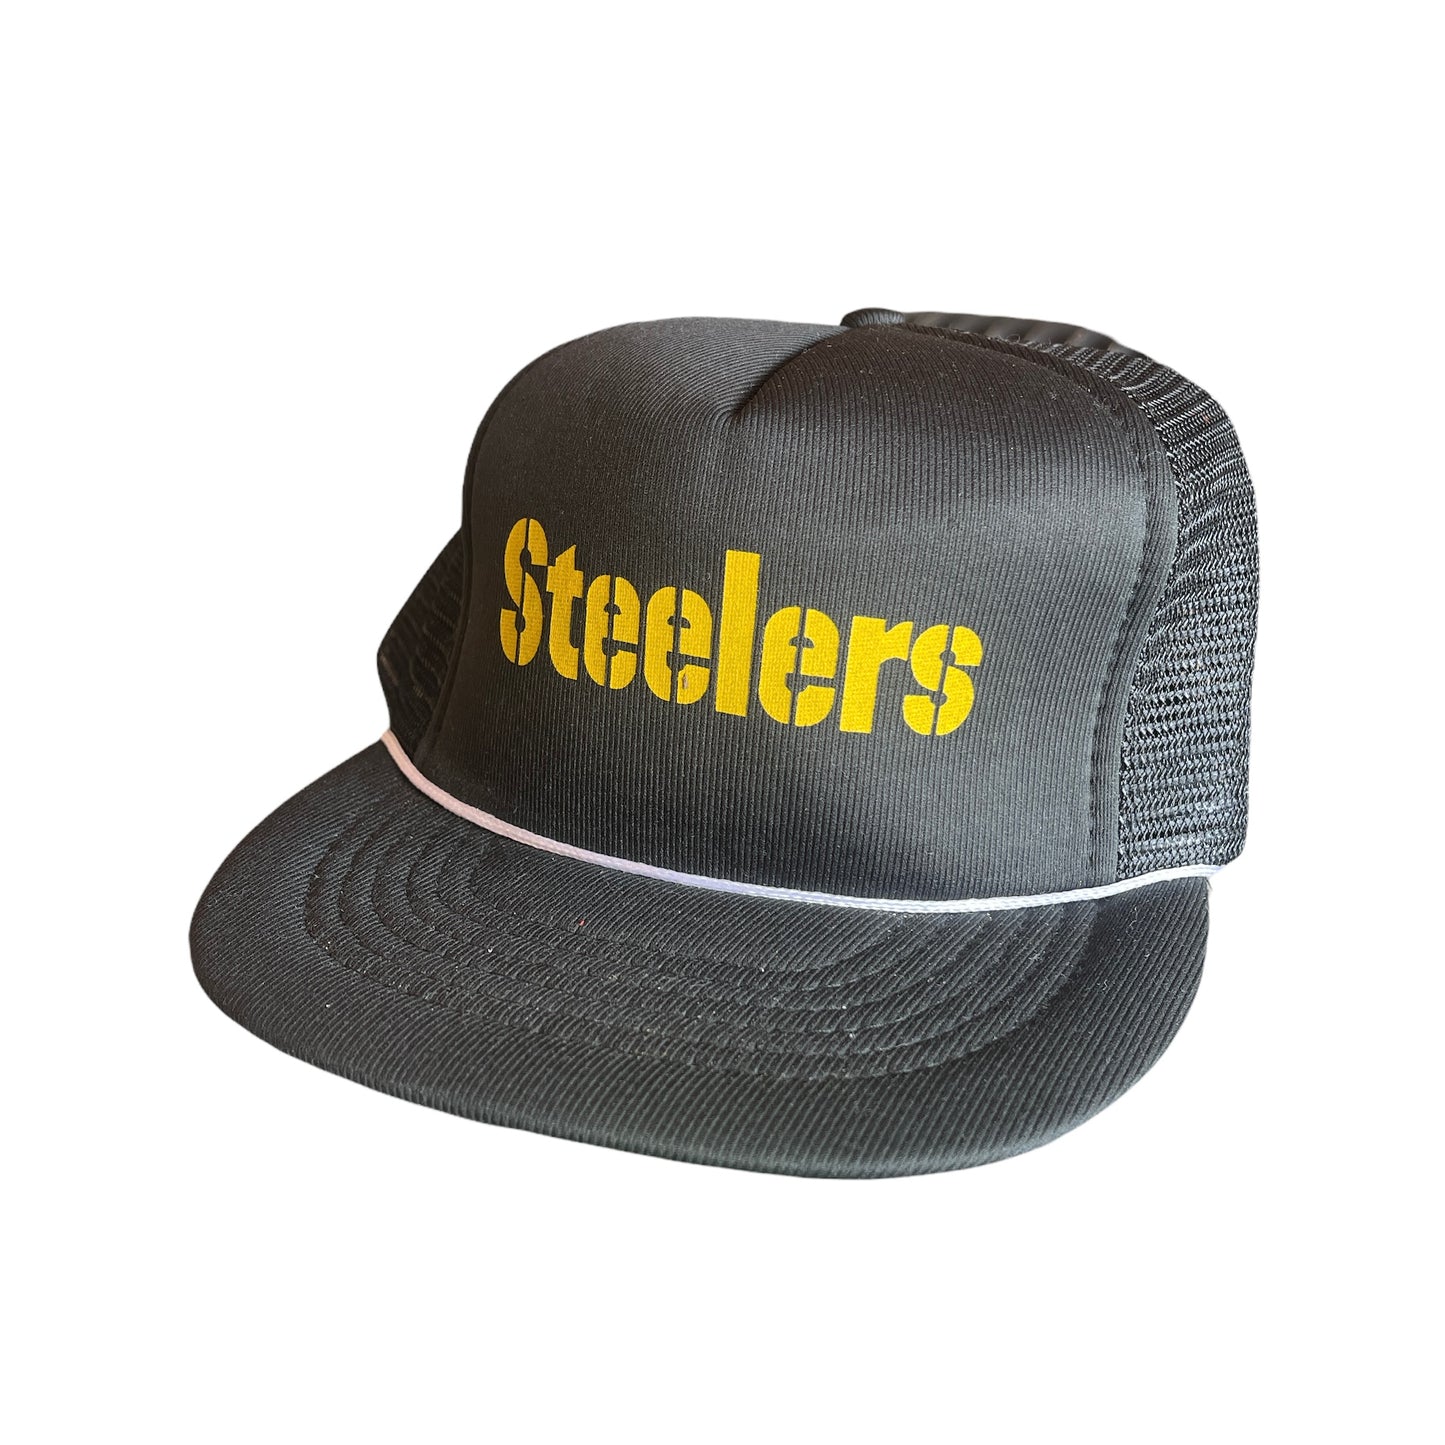 Vintage 80s Steelers Trucker Snap Back Hat